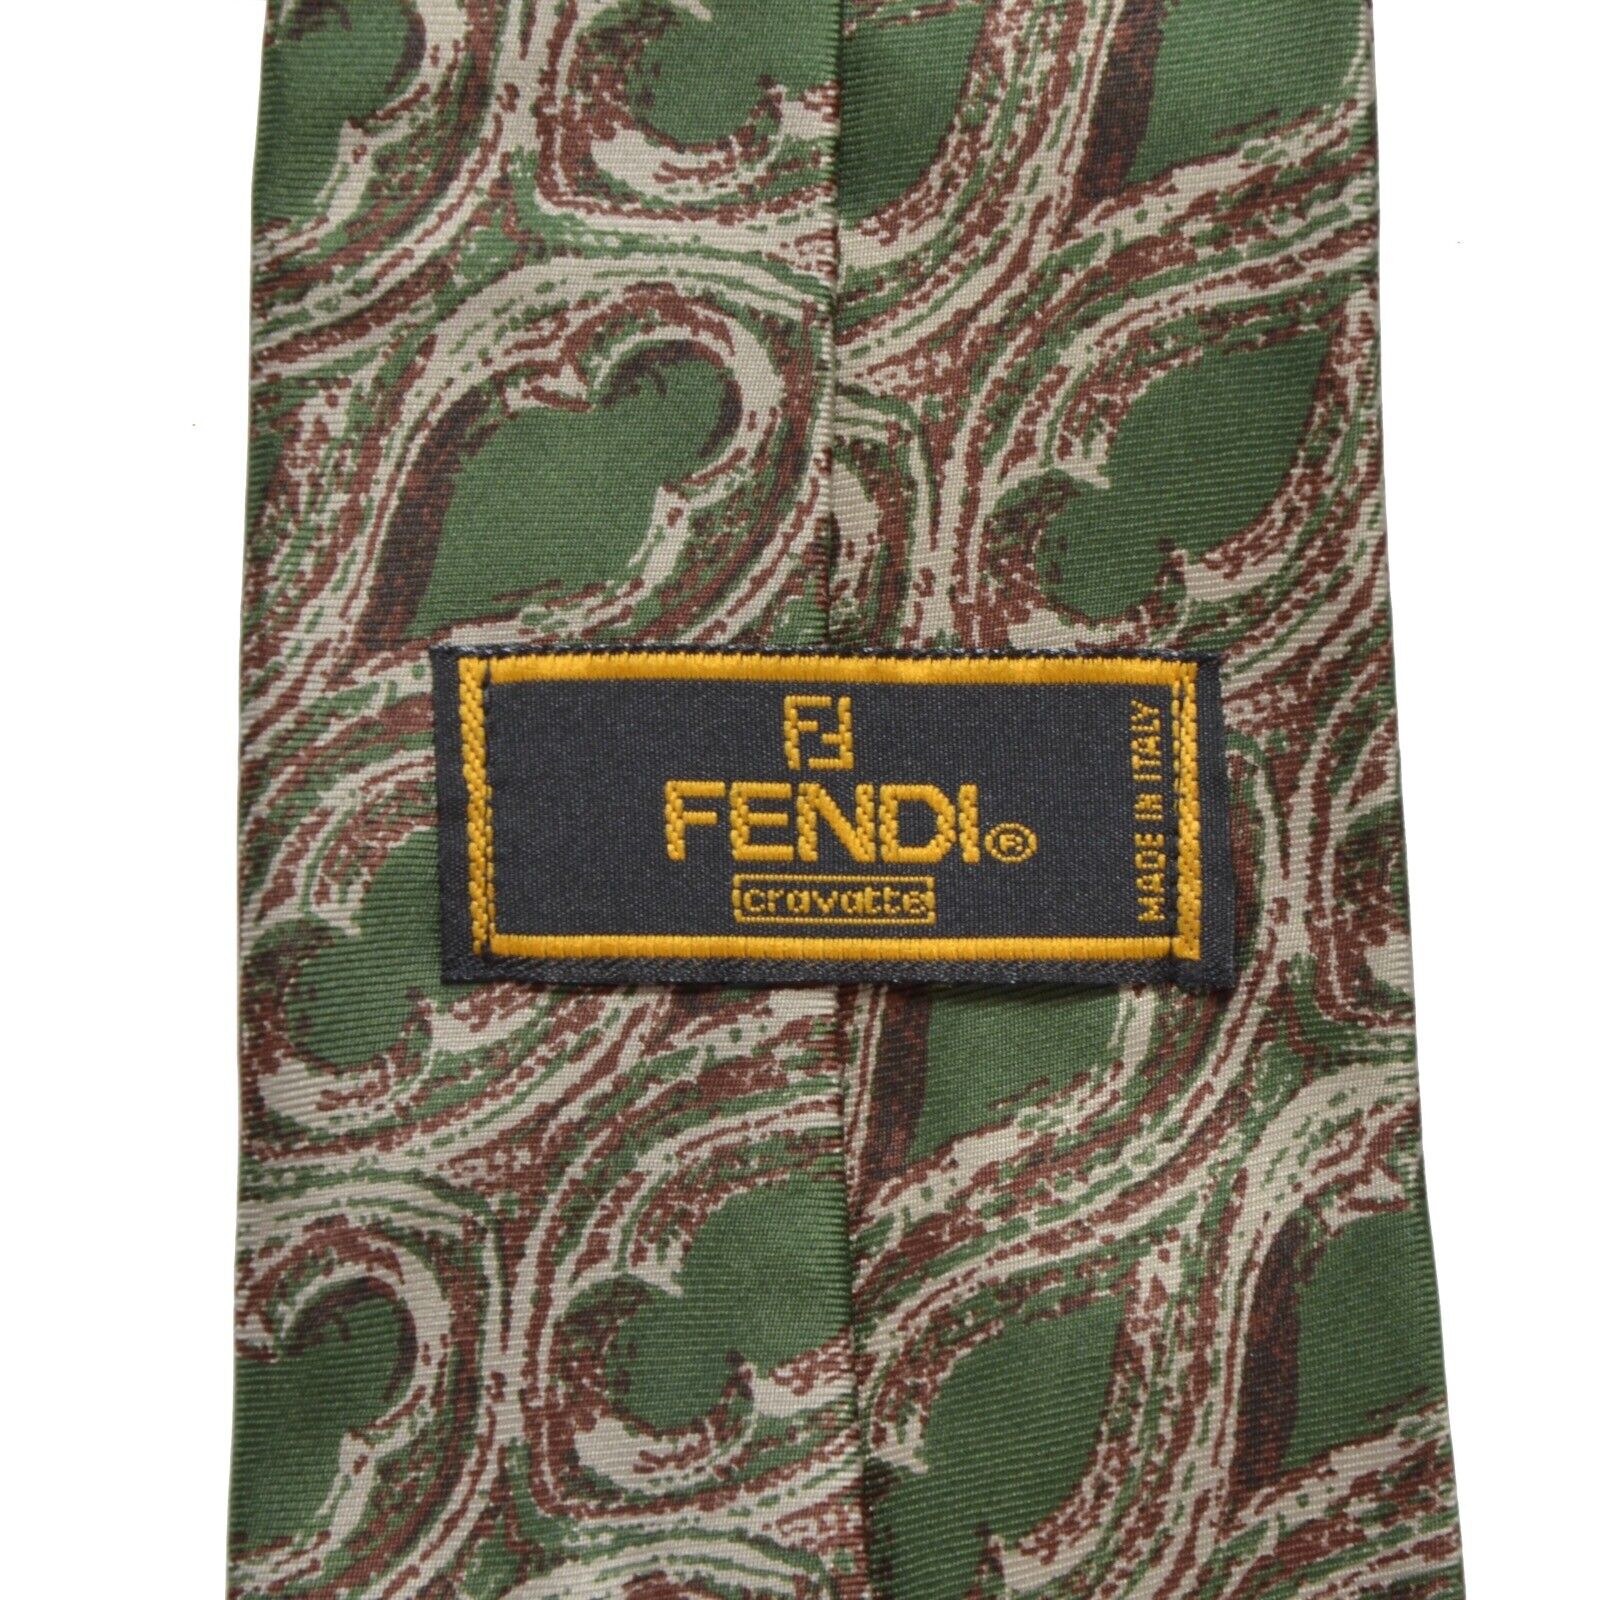 Fendi Roma Krawatte Tie 100% Seide Silk Grün Green Made in Italy CLASSIC Paisley